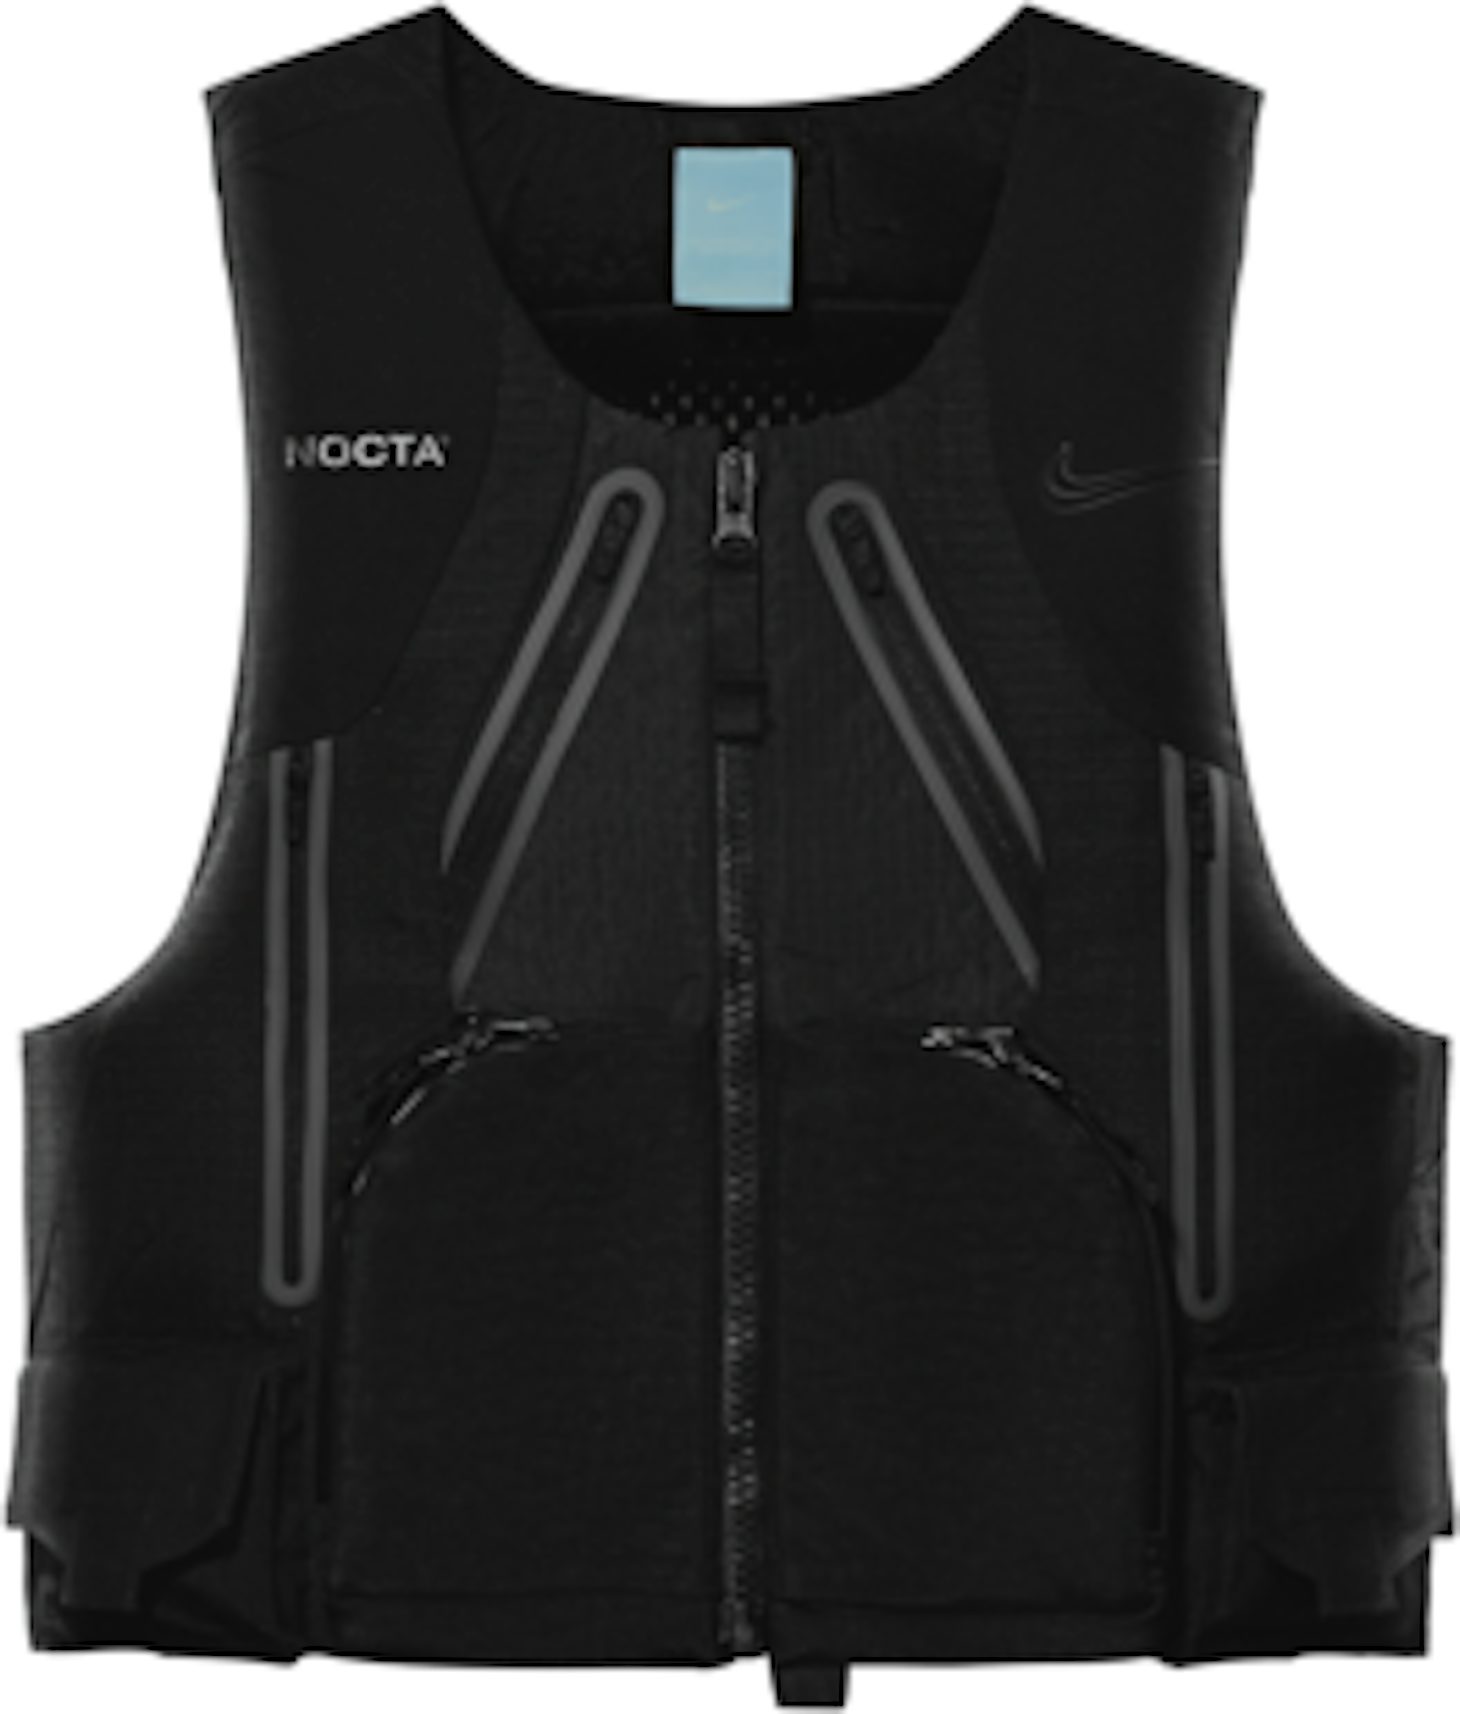 https://stockx.com/fr-fr/nike-x-drake-nocta-tactical-vest-black